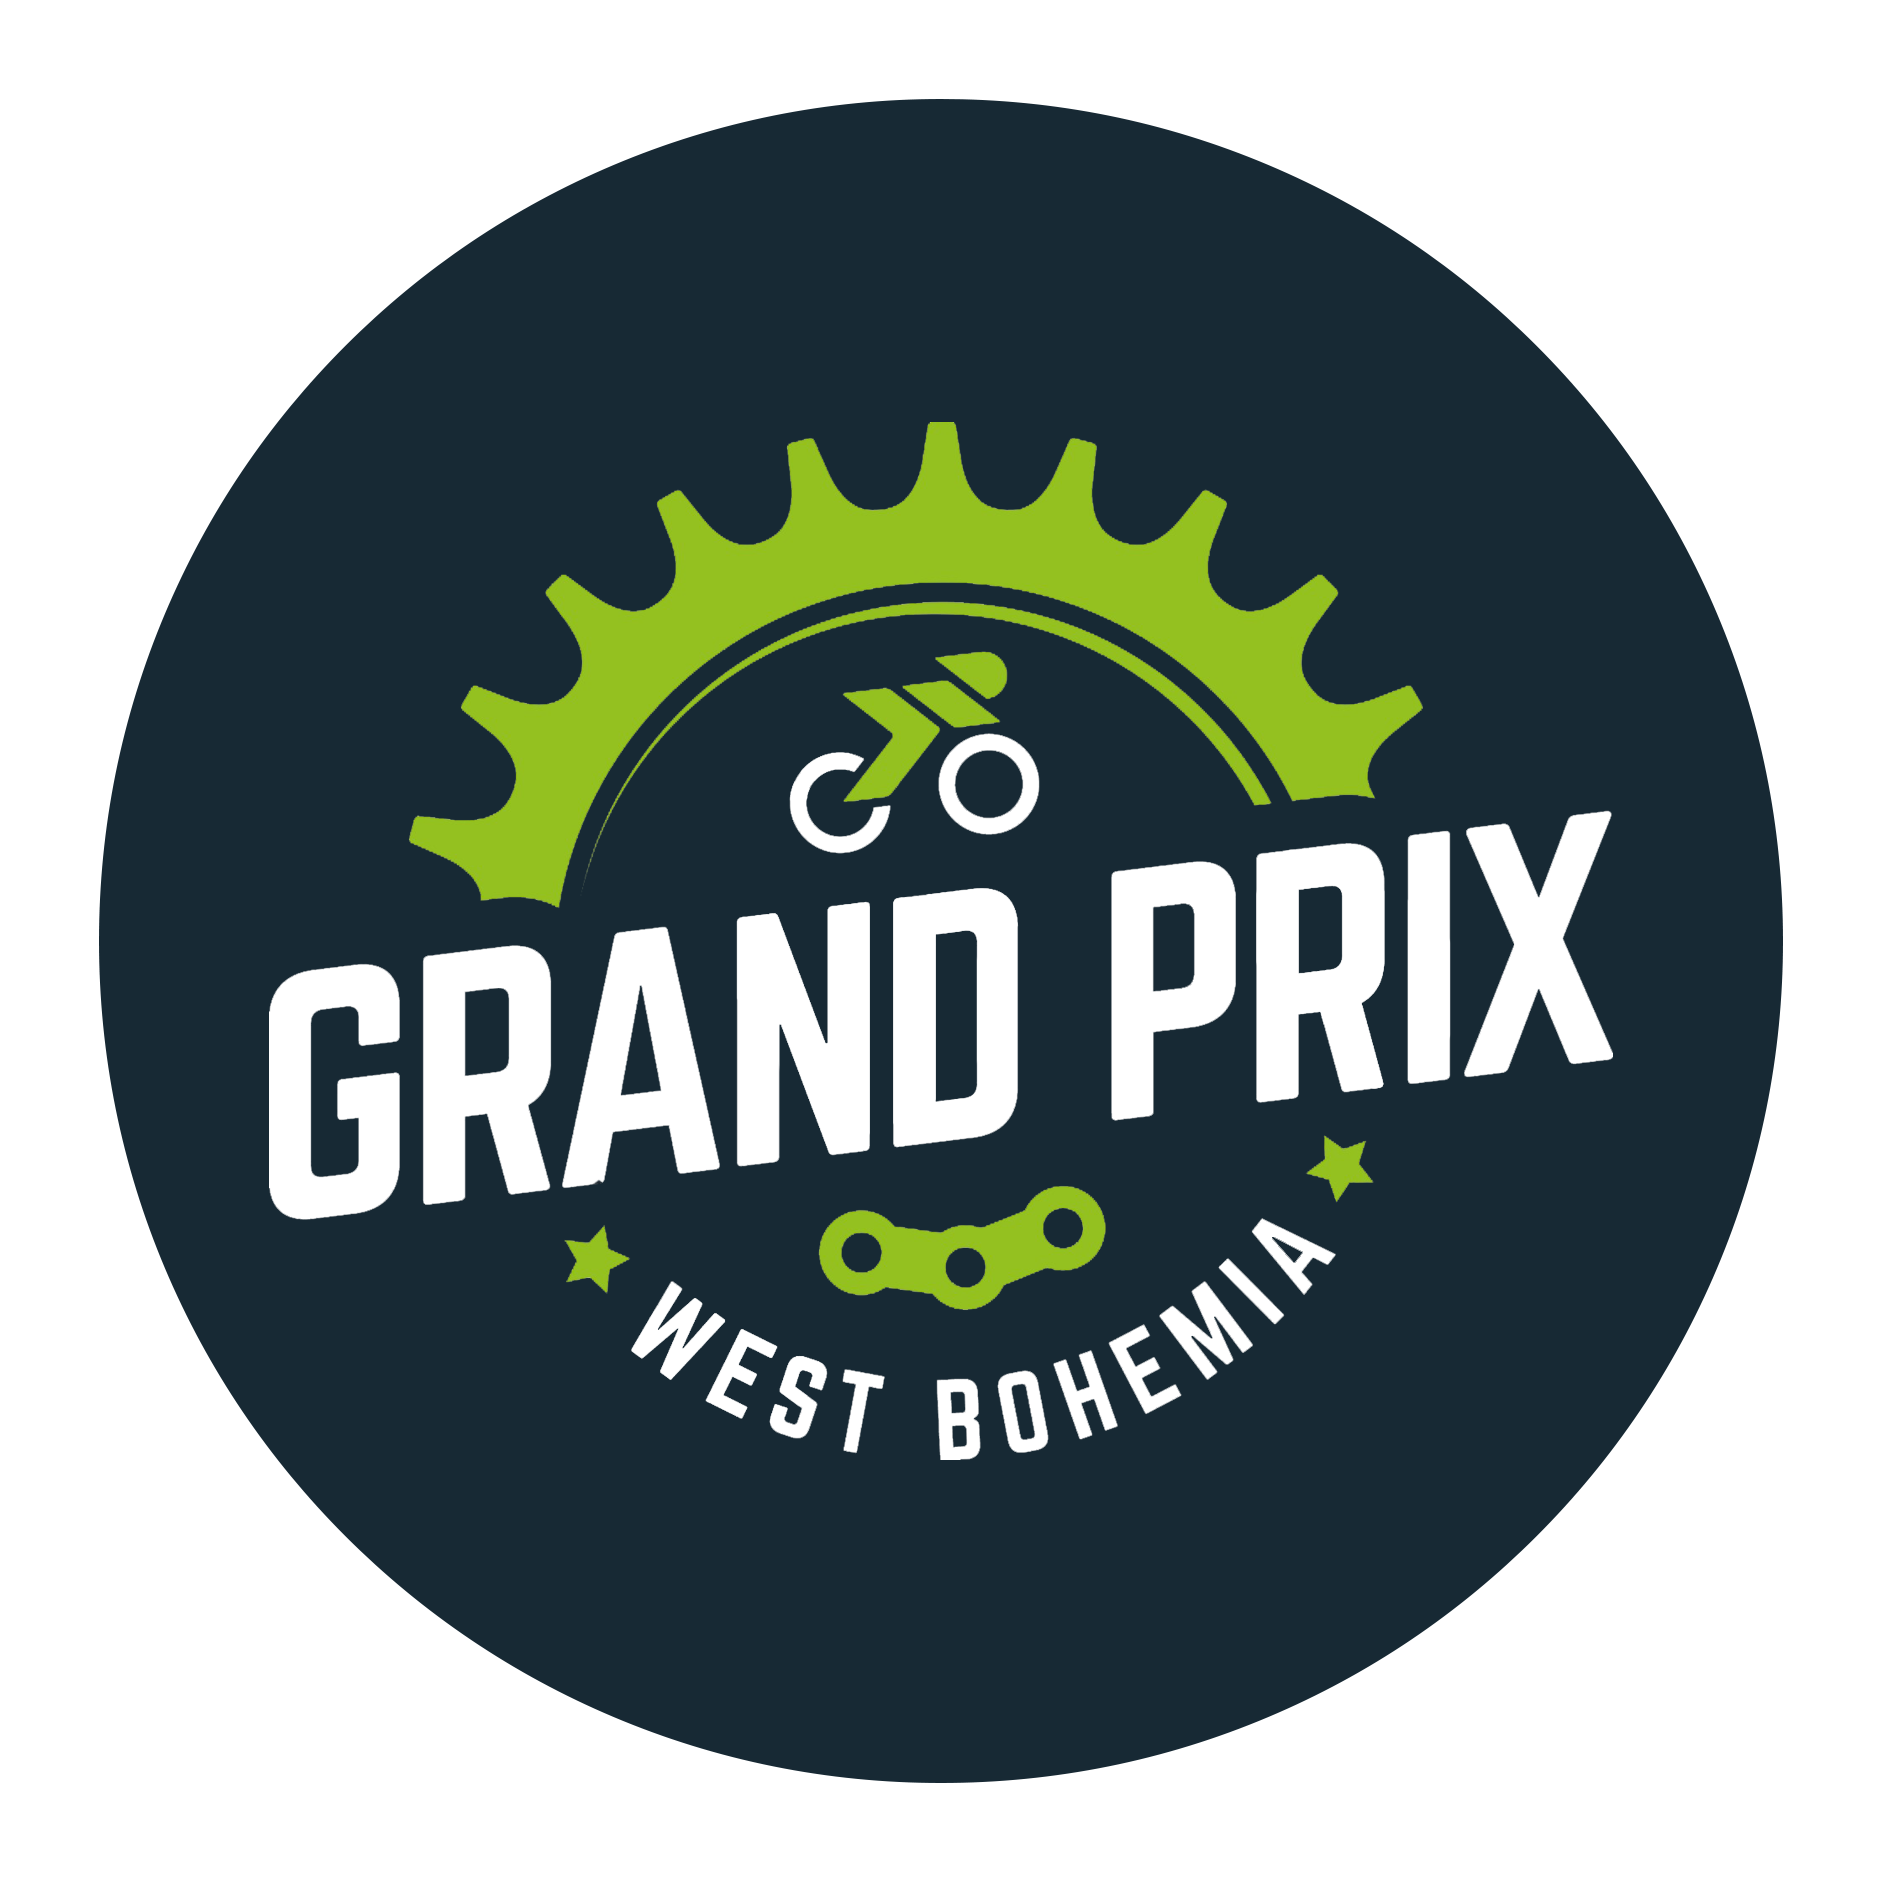 Grand Prix PNG Image gratuite